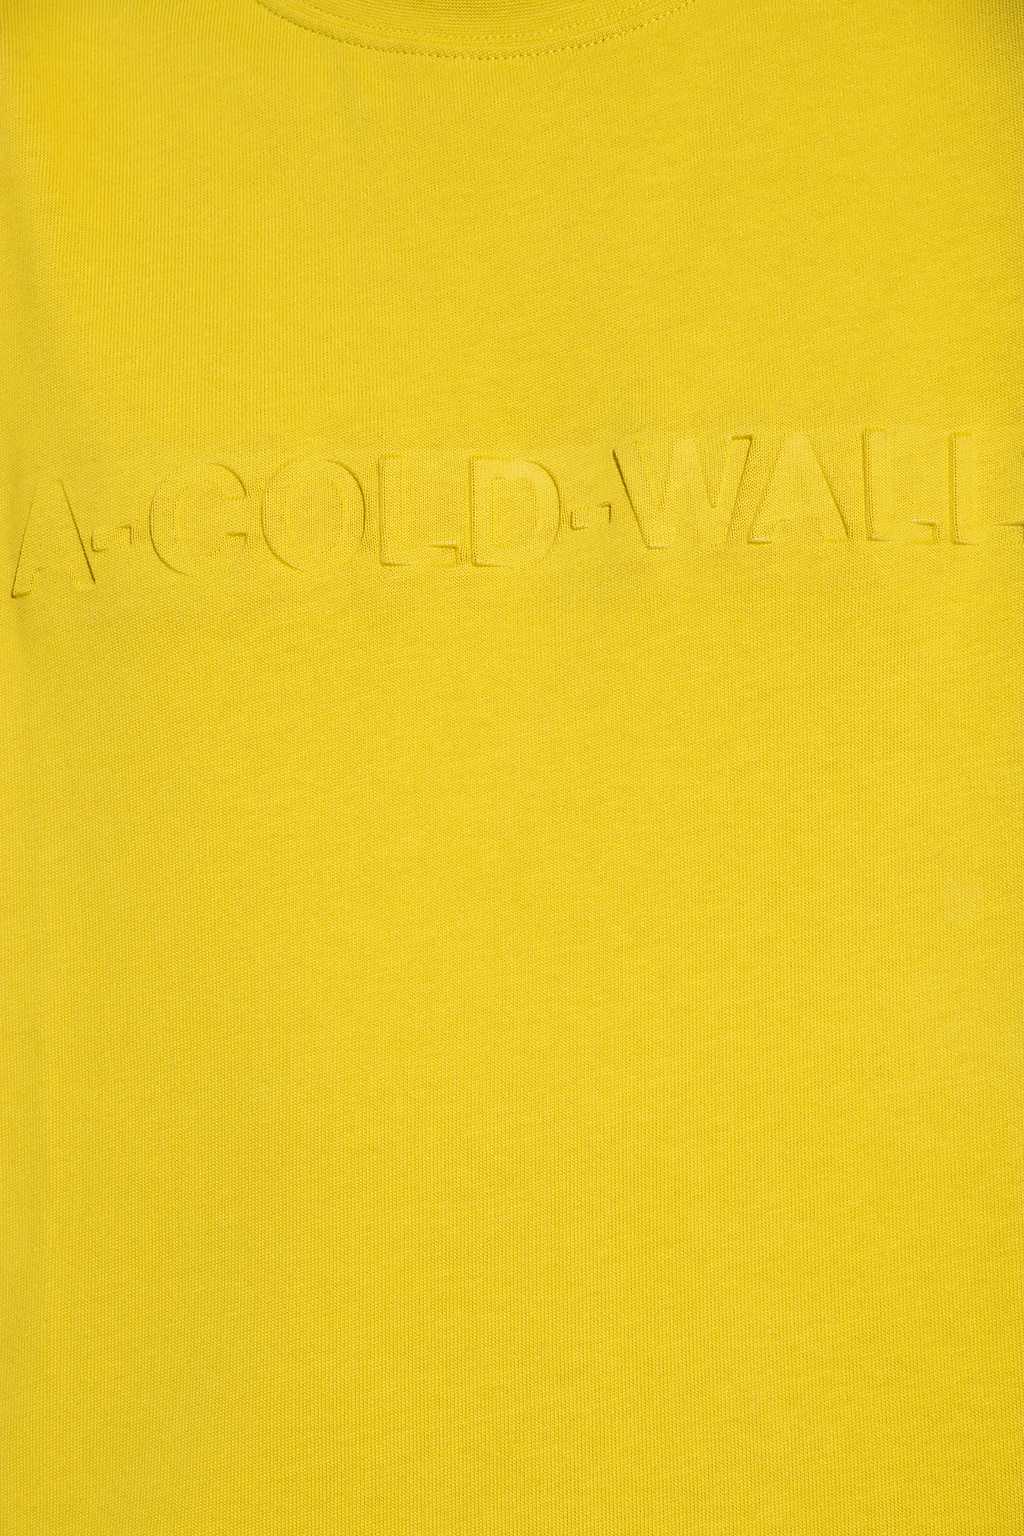 A-COLD-WALL* Logo T-shirt